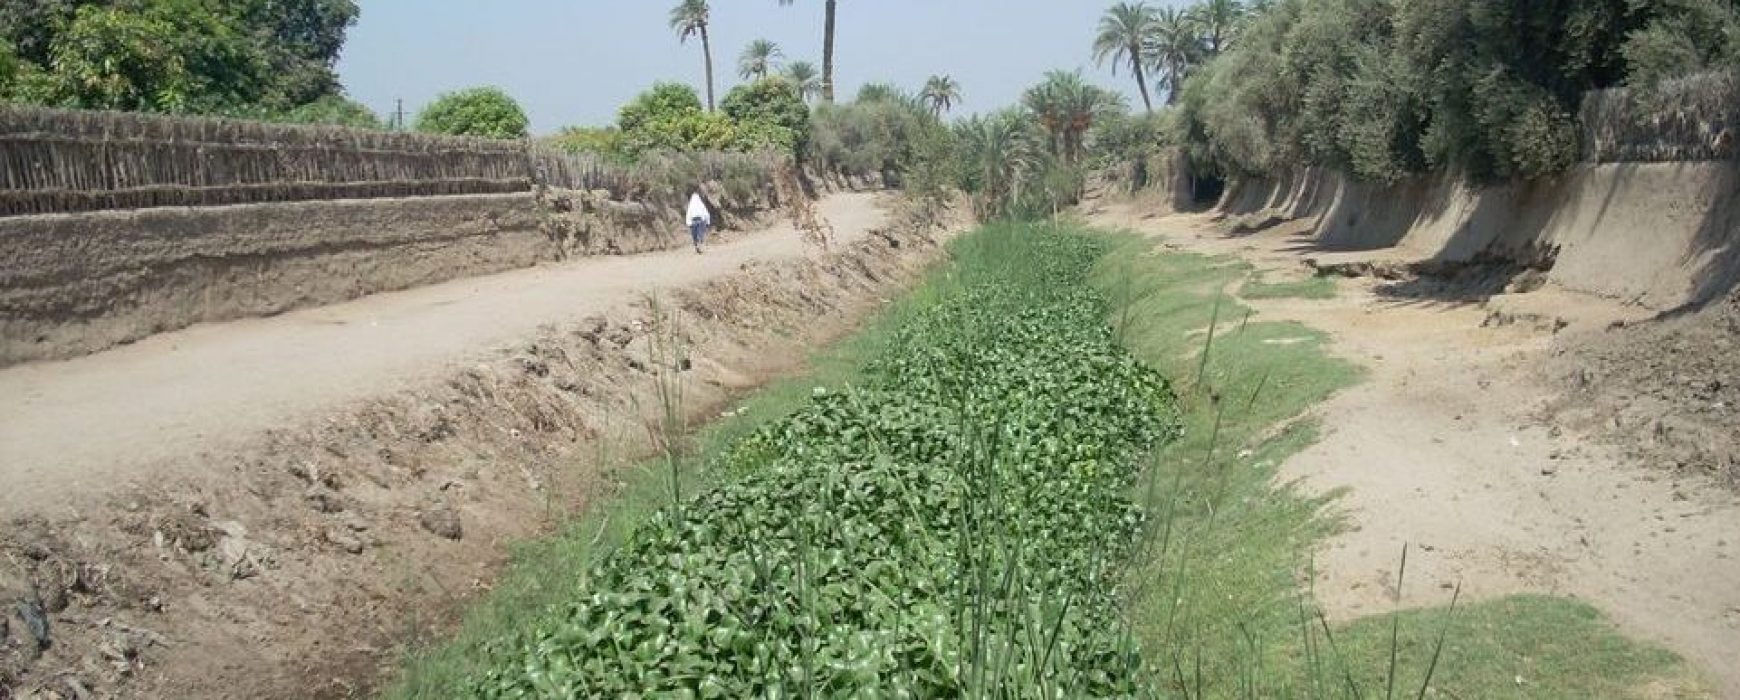 Assessment of the development of infestation of water hyacinths, EGYPT/SUDAN